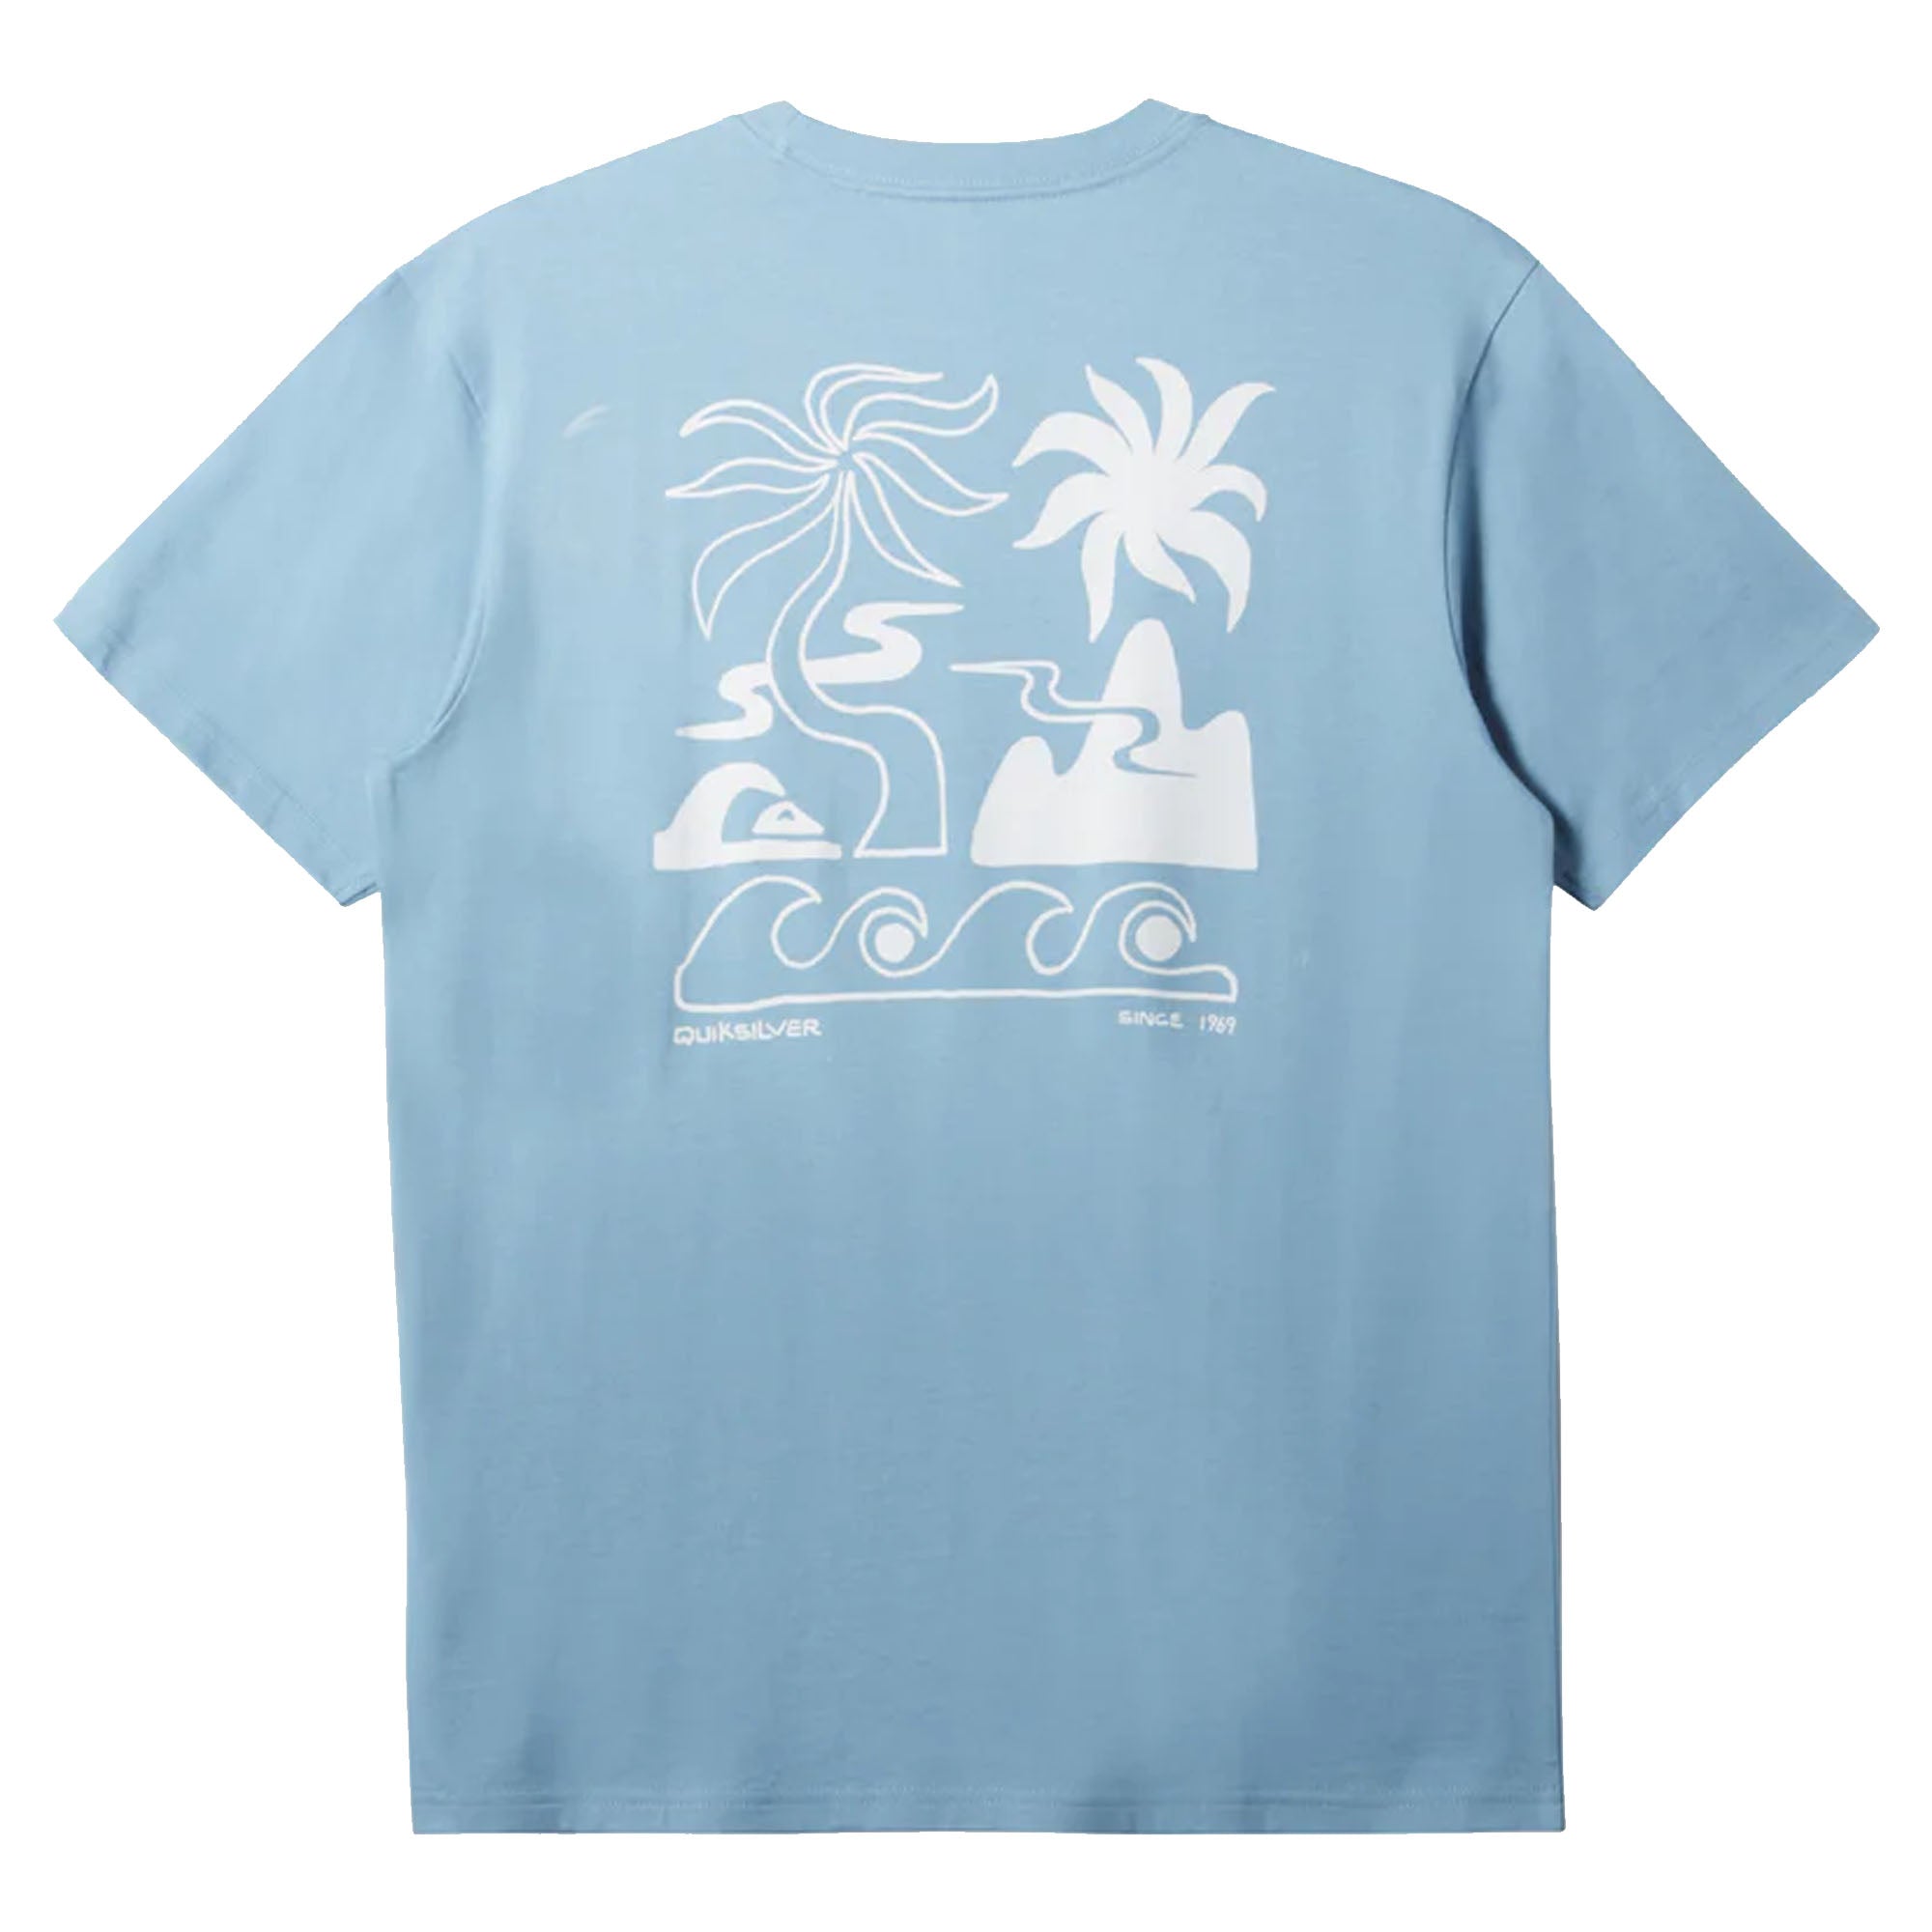 Quiksilver Tropical Breeze Men's S/S T-Shirt